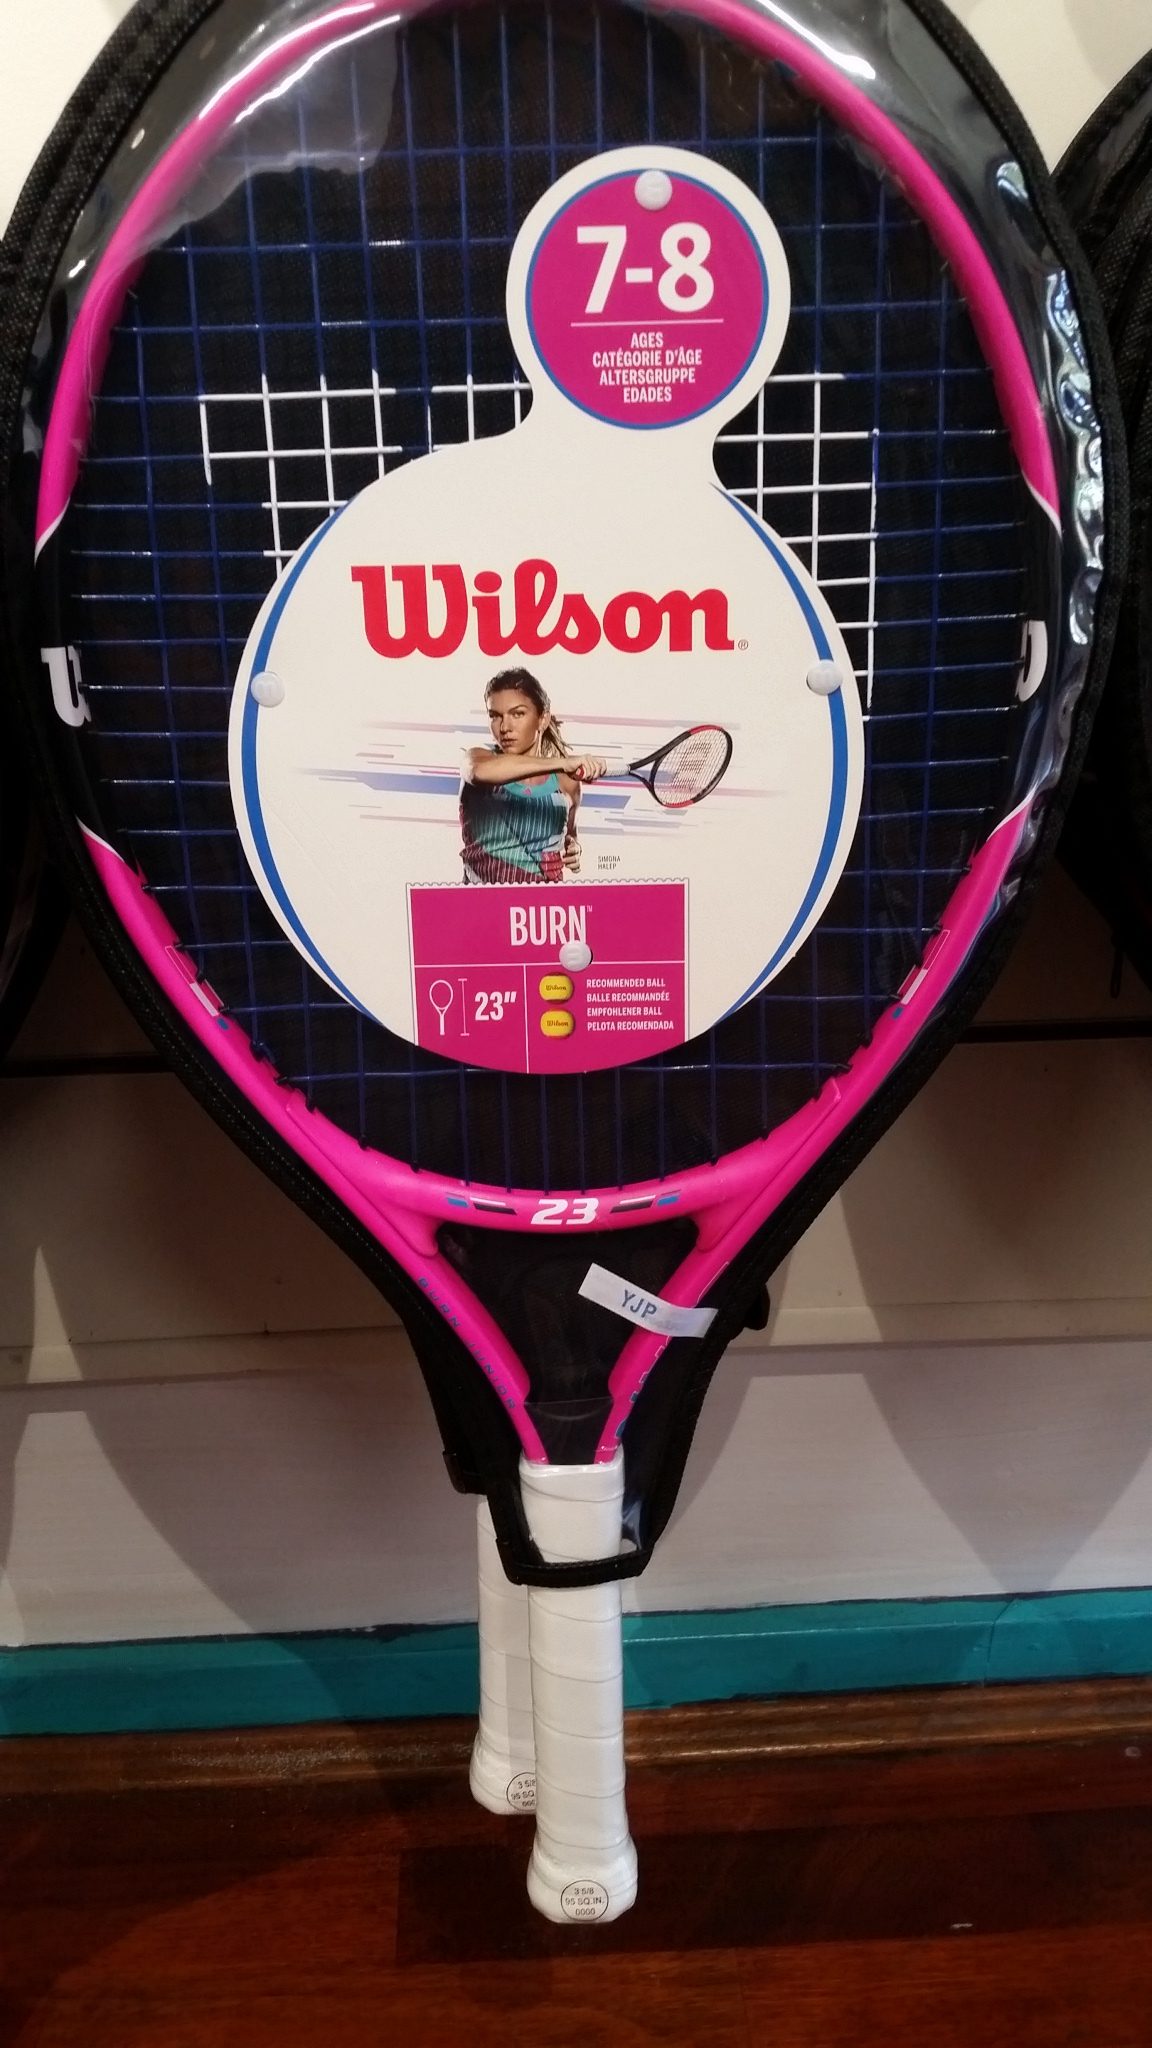 Wilson Burn 7-8 Years Old Black 23" Tennis | Tennis shoes | Tennis clothing